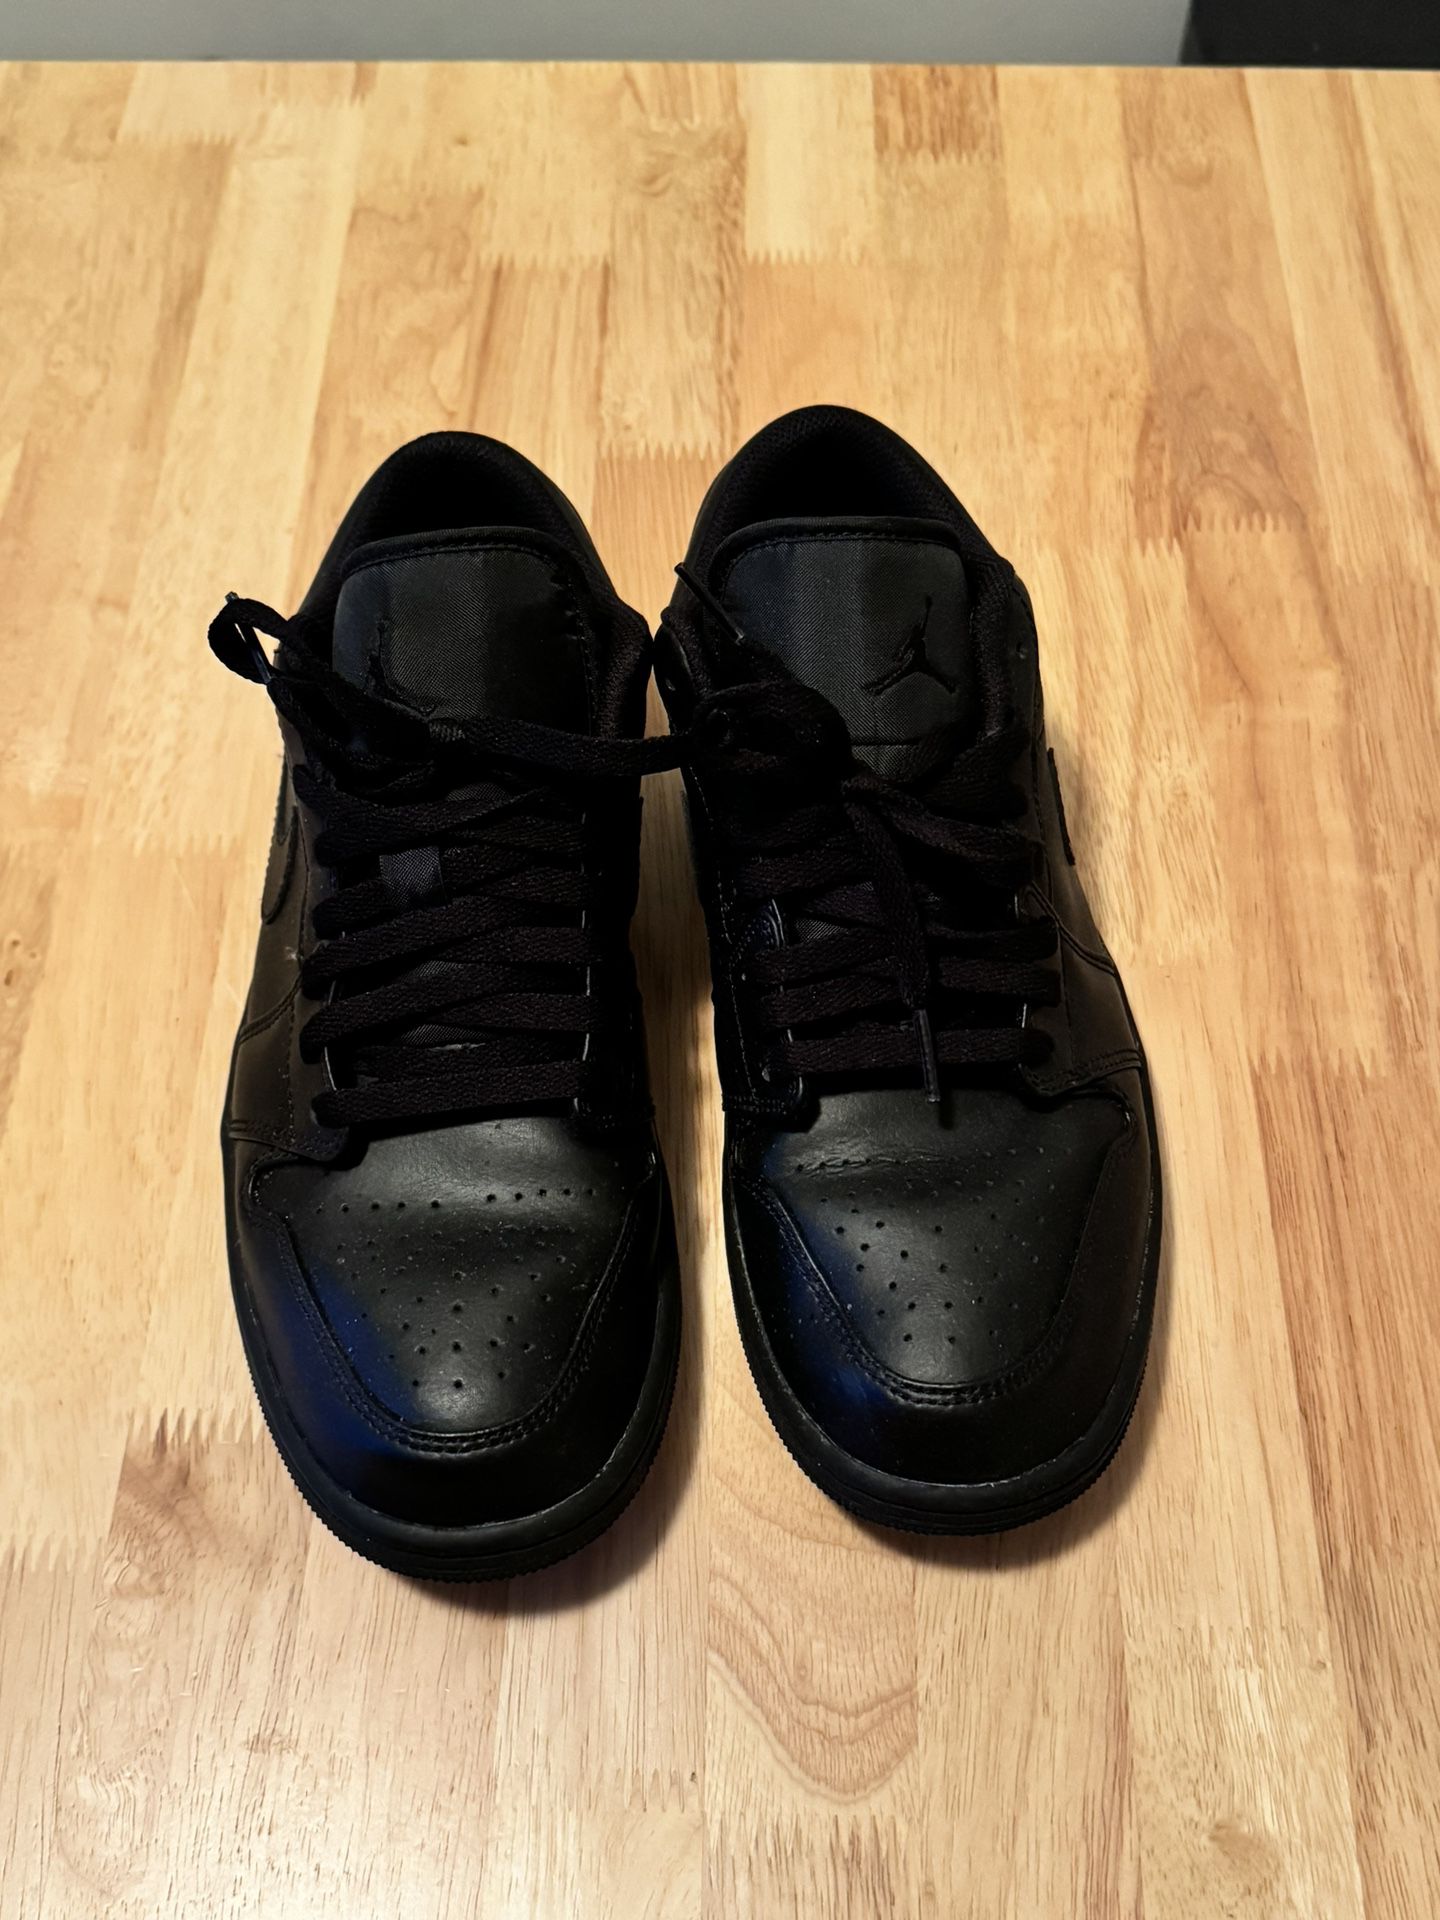 Jordan 1s Low Black Size 9.5 